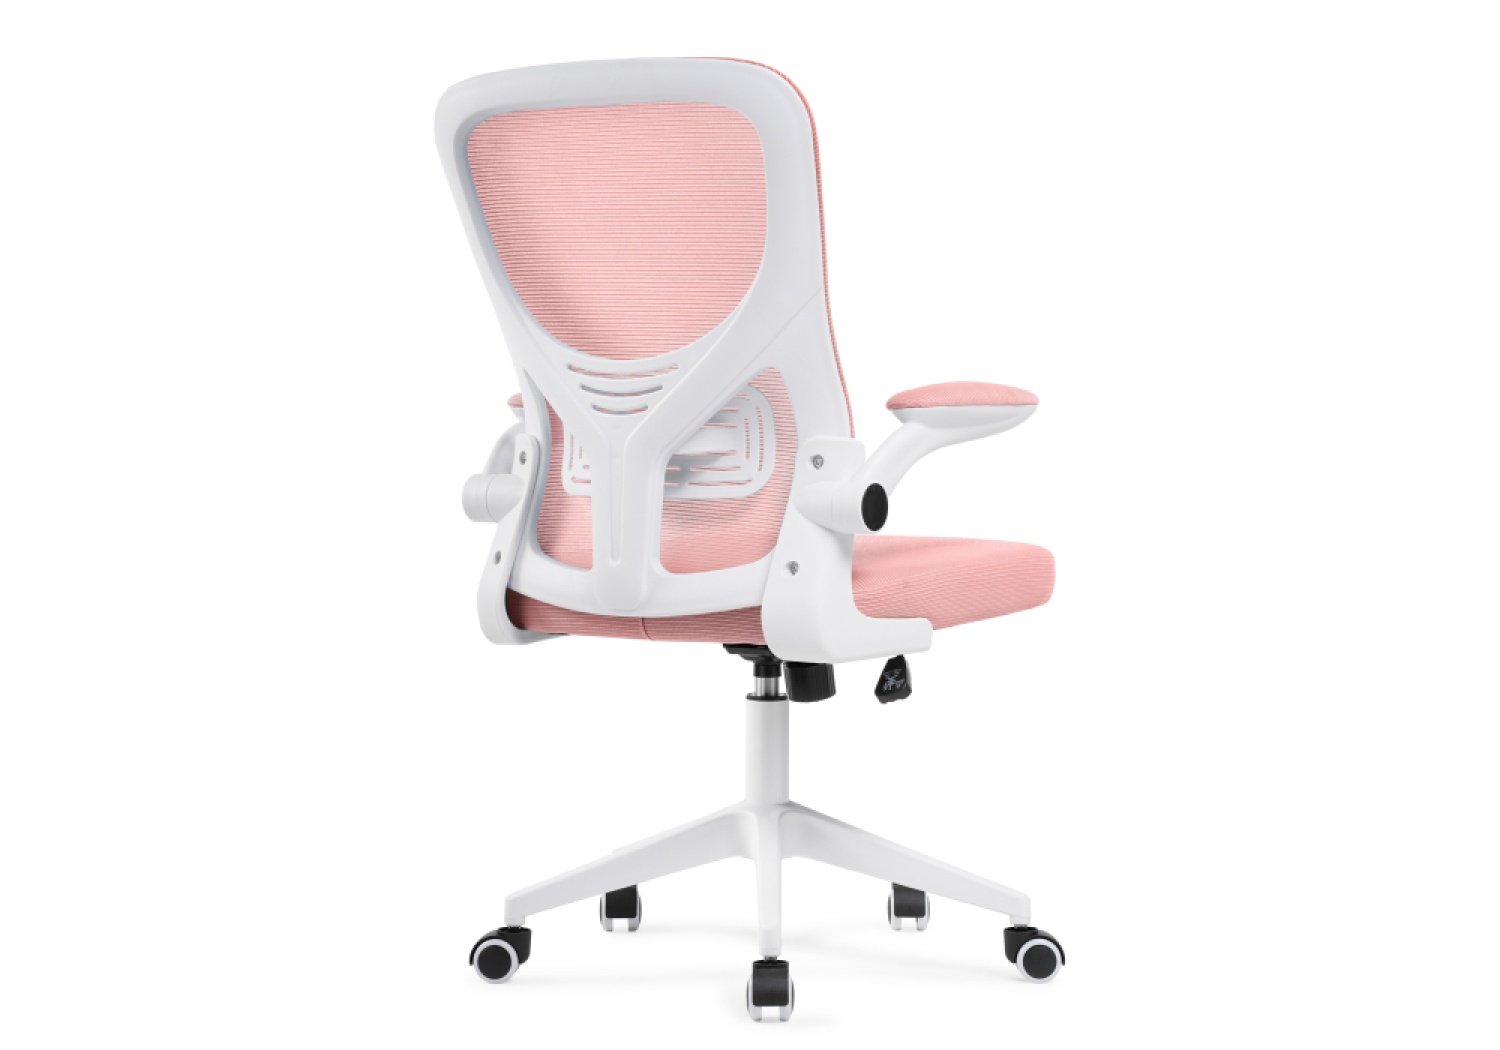 Офисное кресло Konfi pink / white